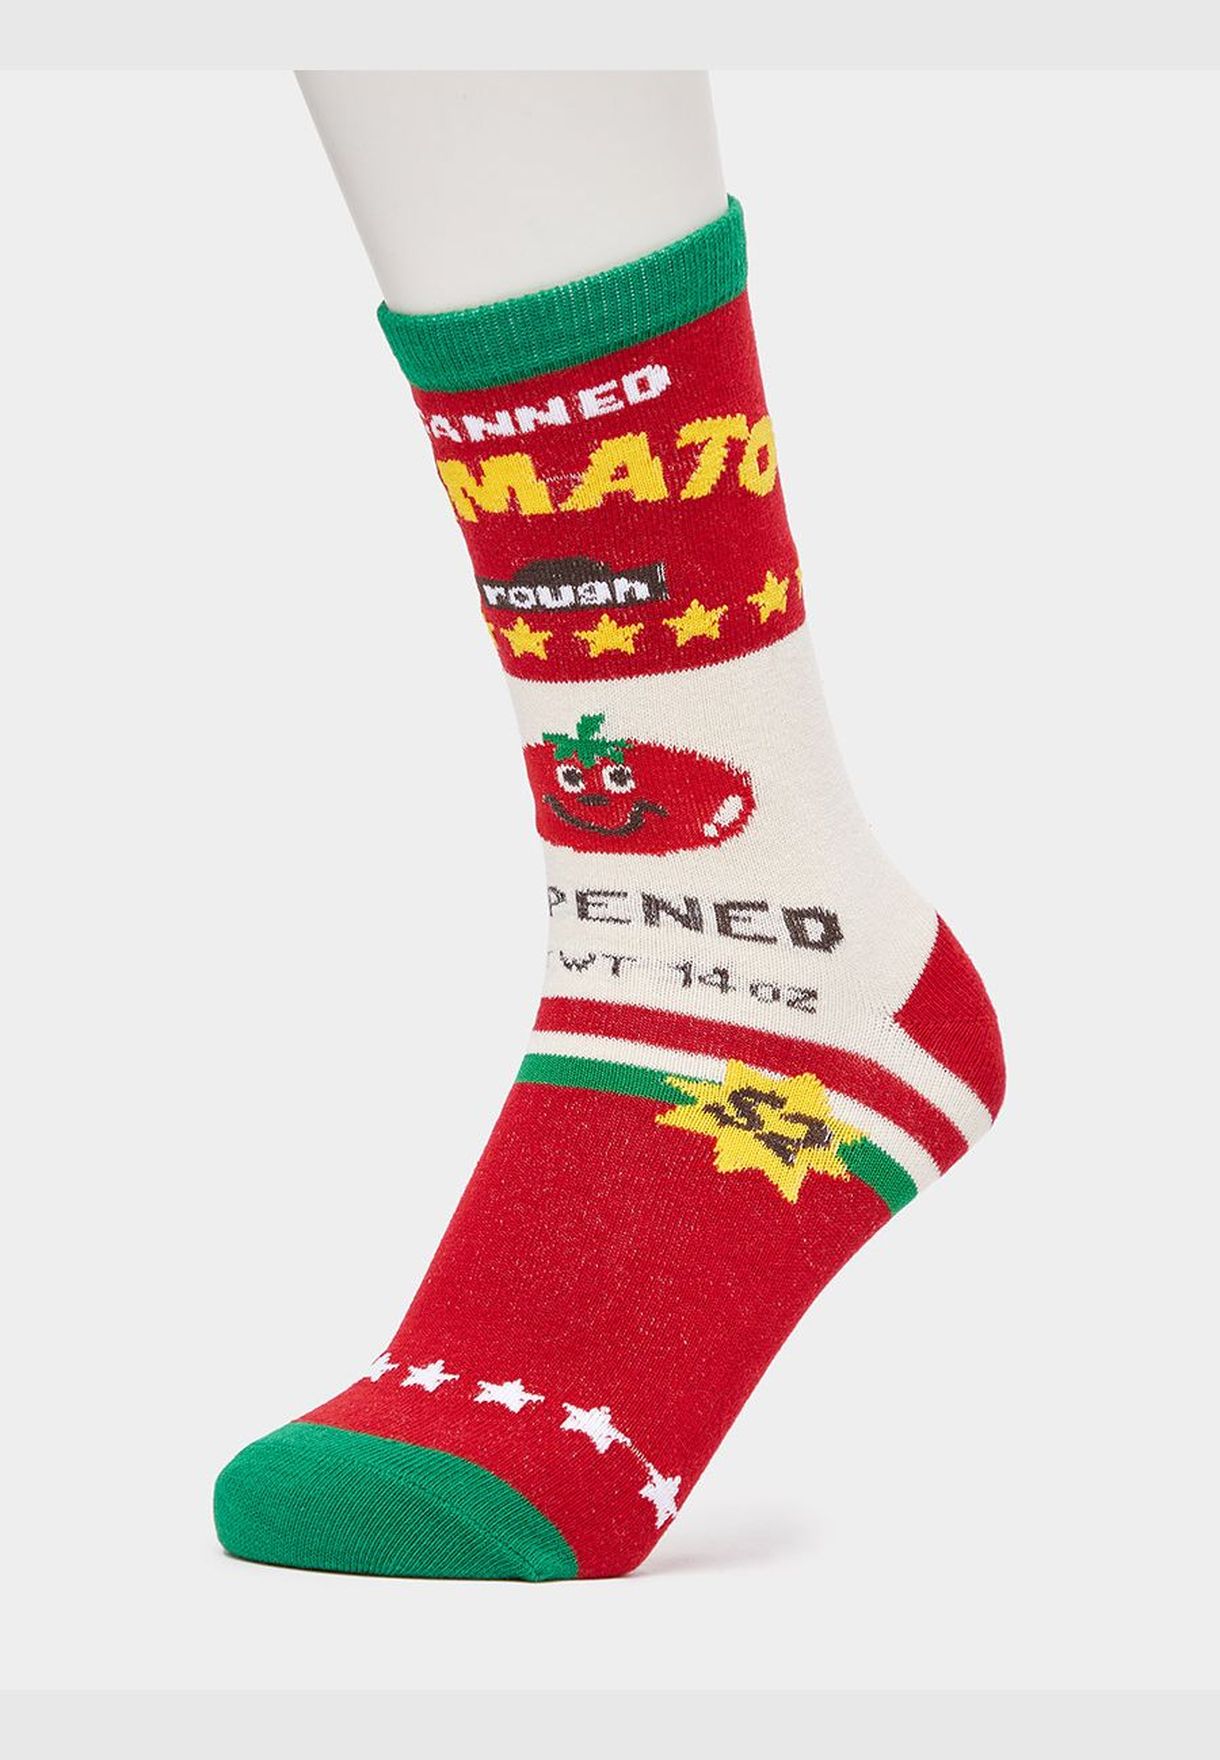 Tomato Graphic Print Crew Length Socks